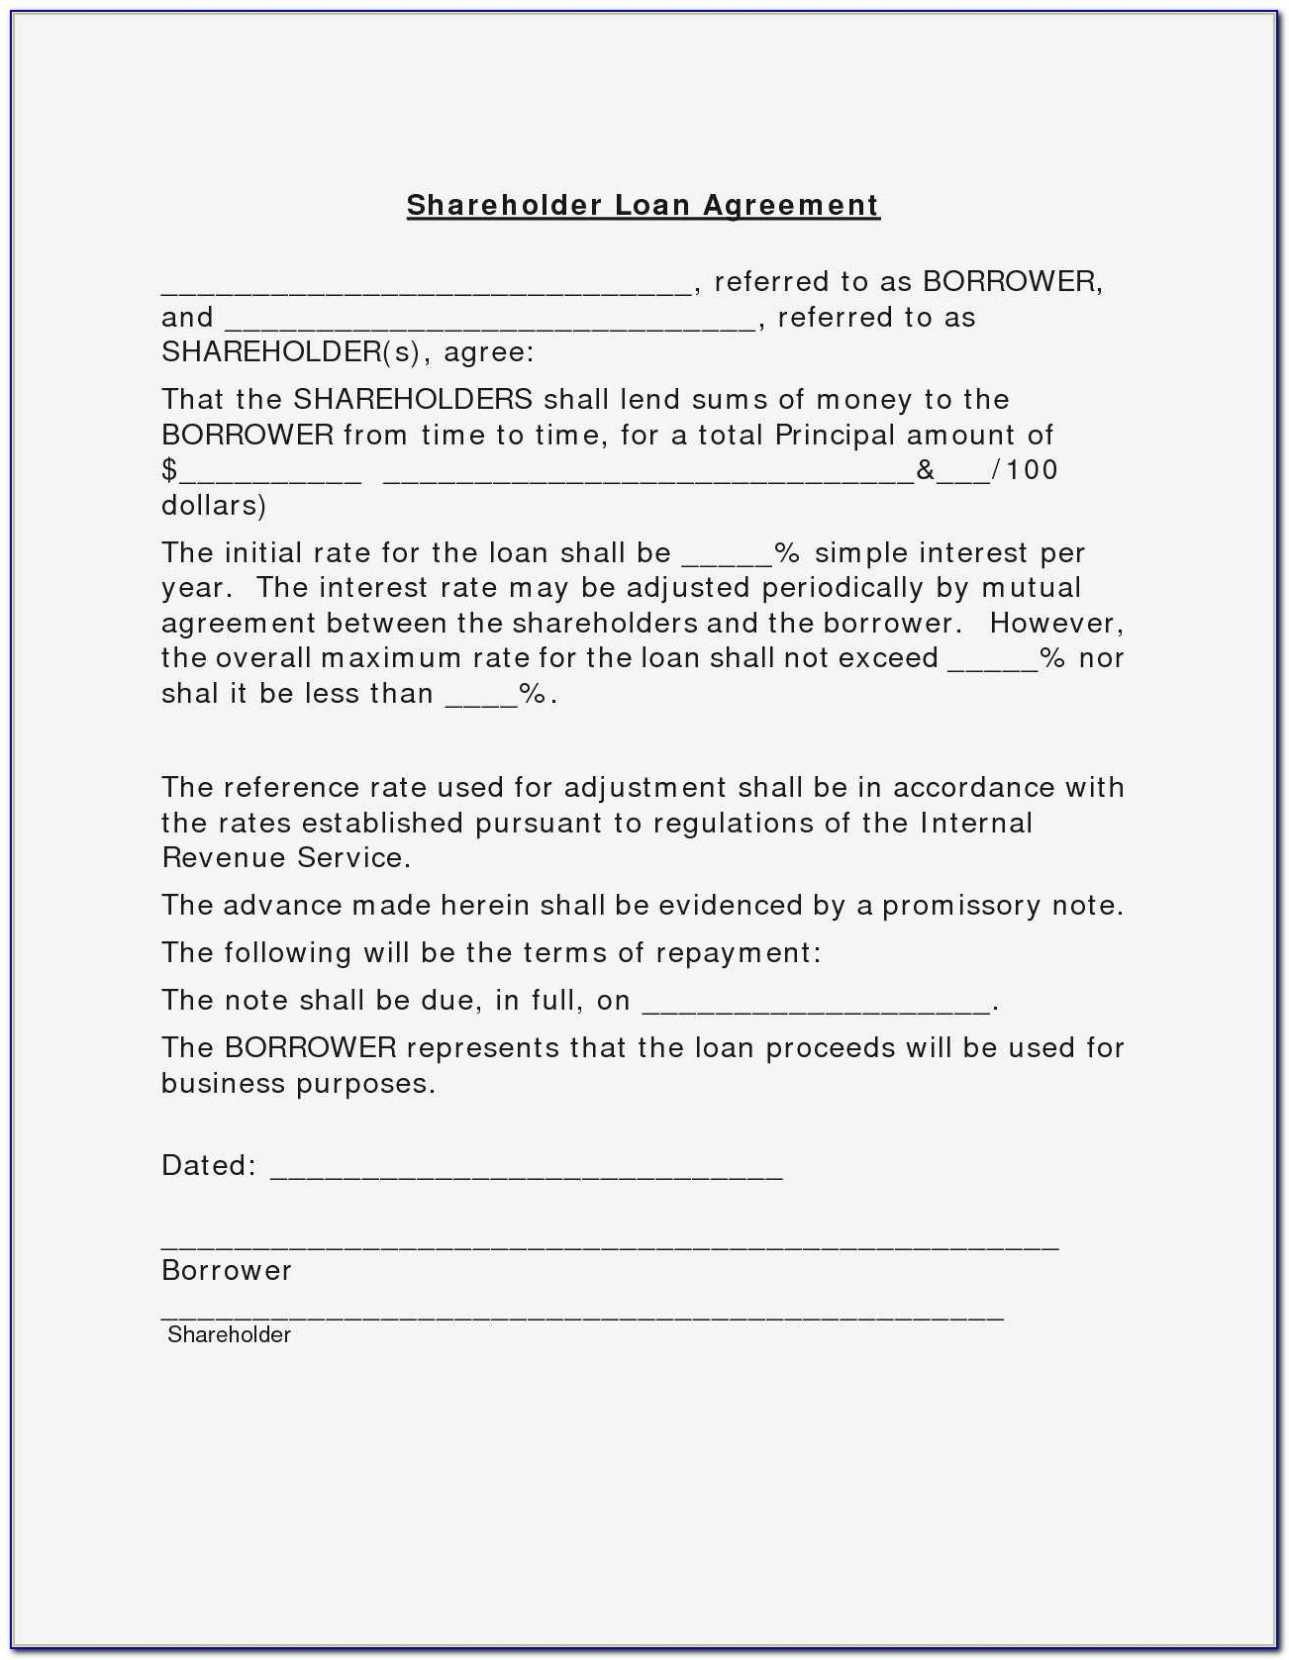 Shareholder Loan Agreement Template - Autismrpphub within Free Shareholder Loan Agreement Template